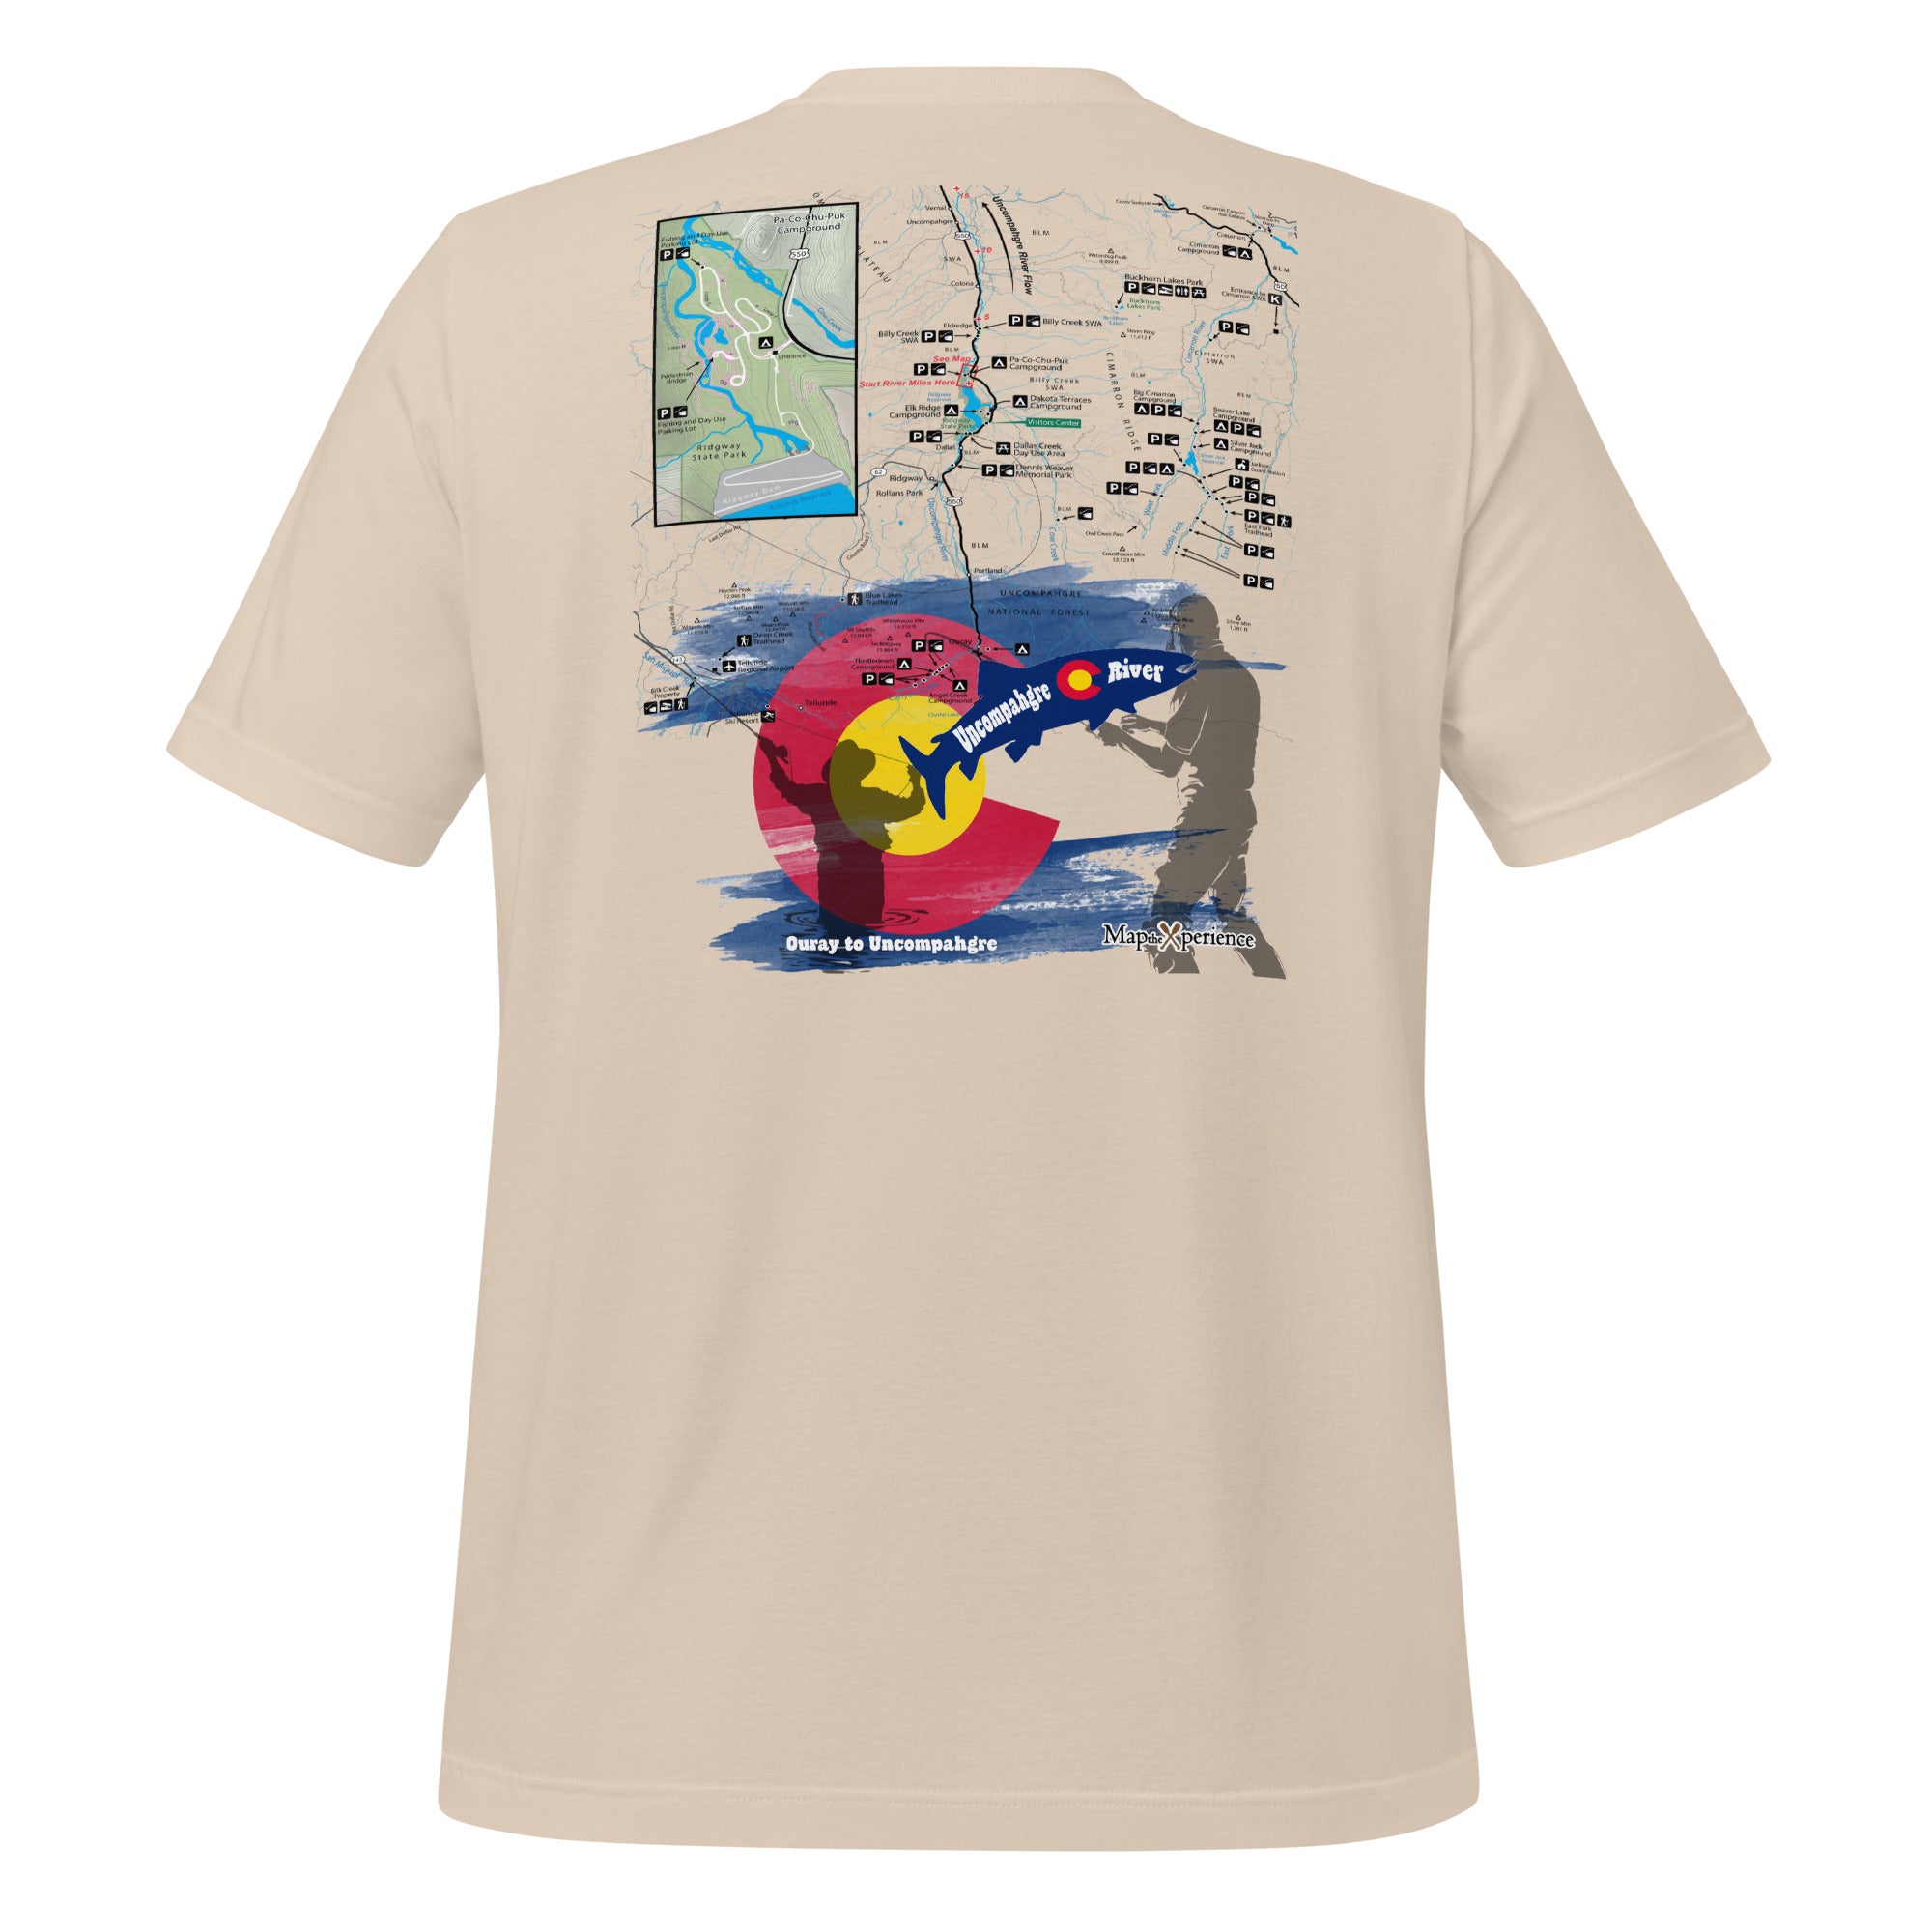 Uncompahgre River Upper, Colorado Performance T-shirt